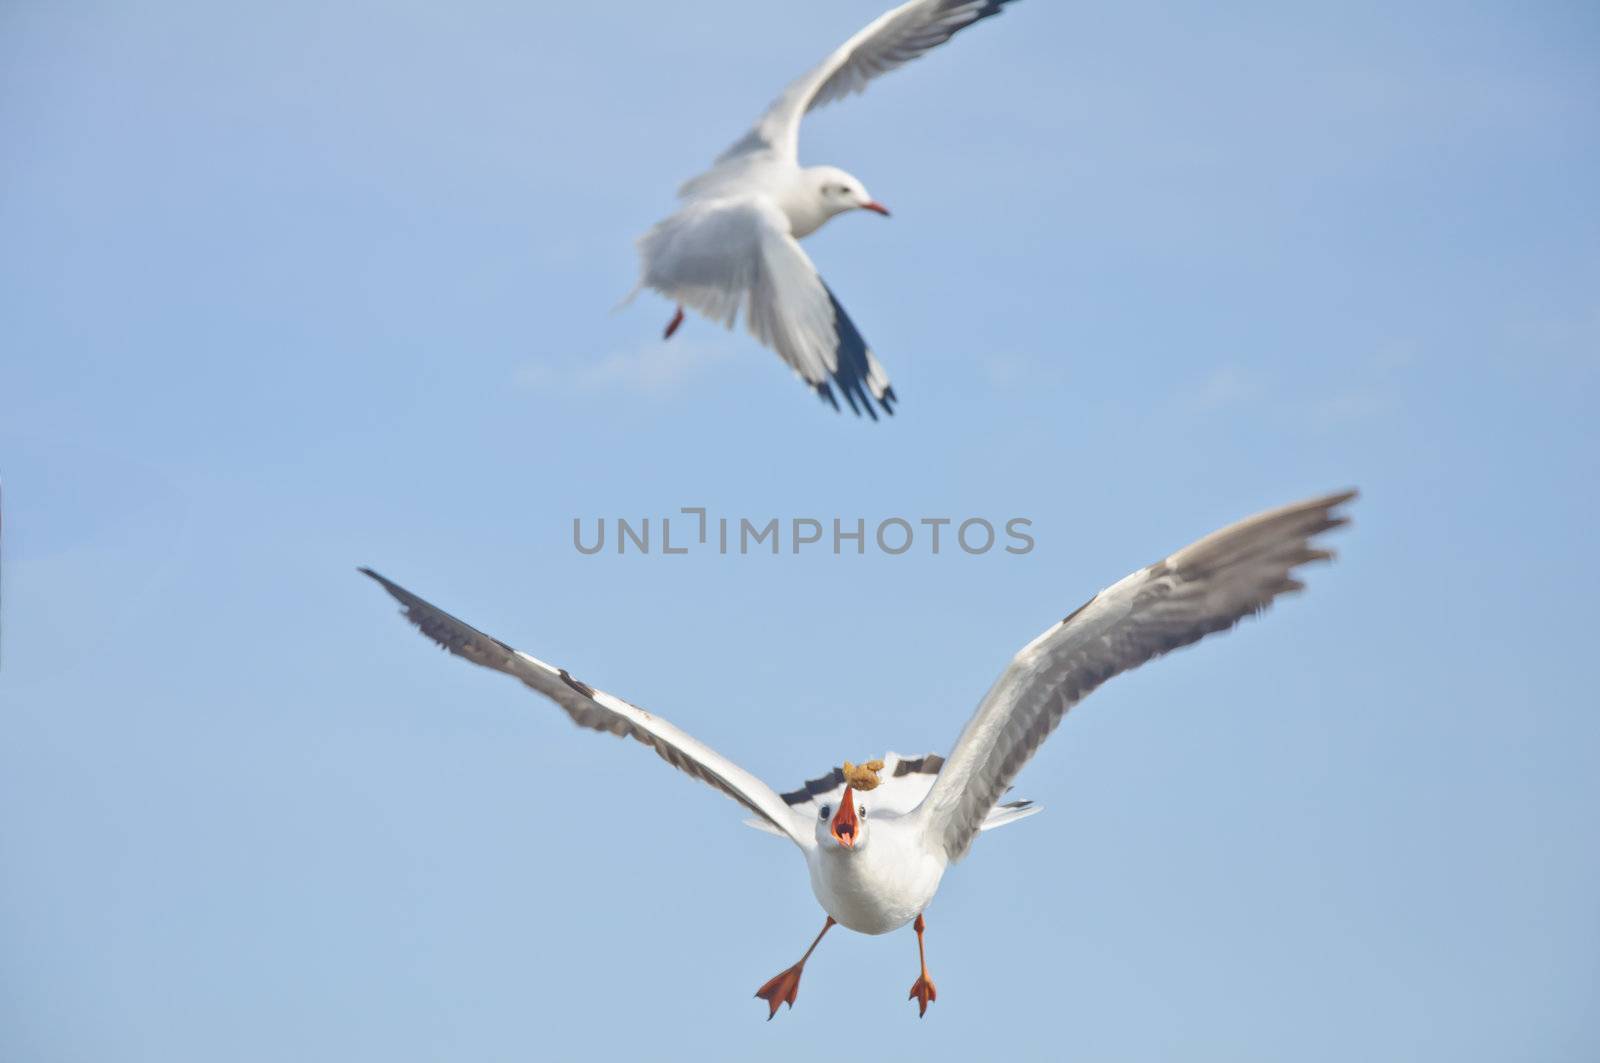 The white seagull flying catch food in blue sky at Bang Pu beach, Samutprakan, Thailand